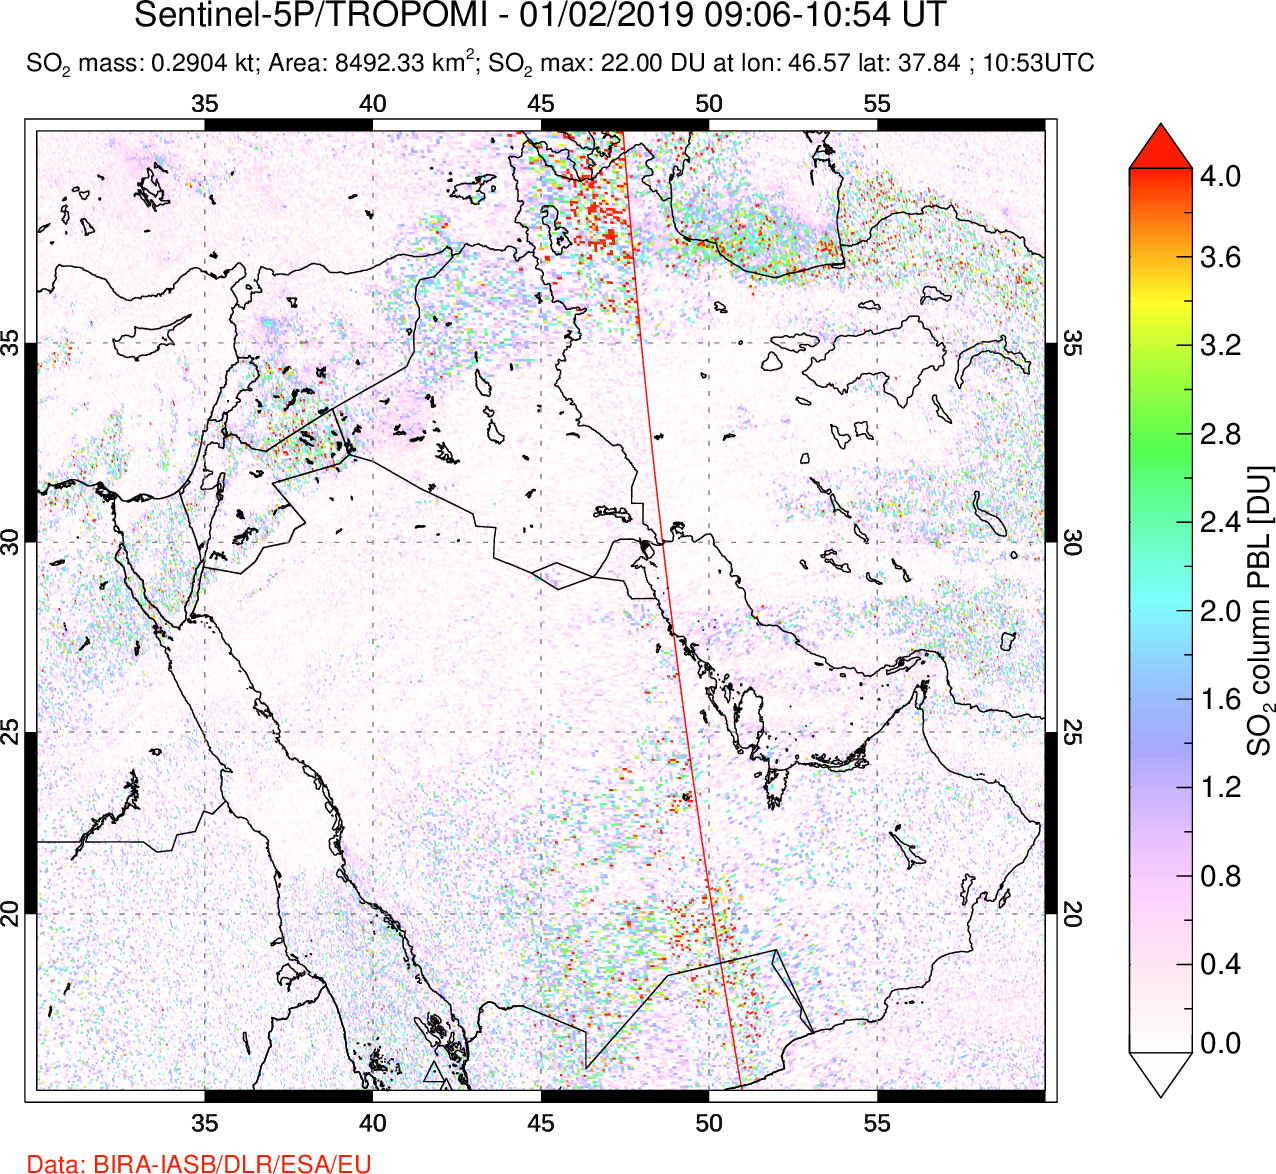 A sulfur dioxide image over Middle East on Jan 02, 2019.